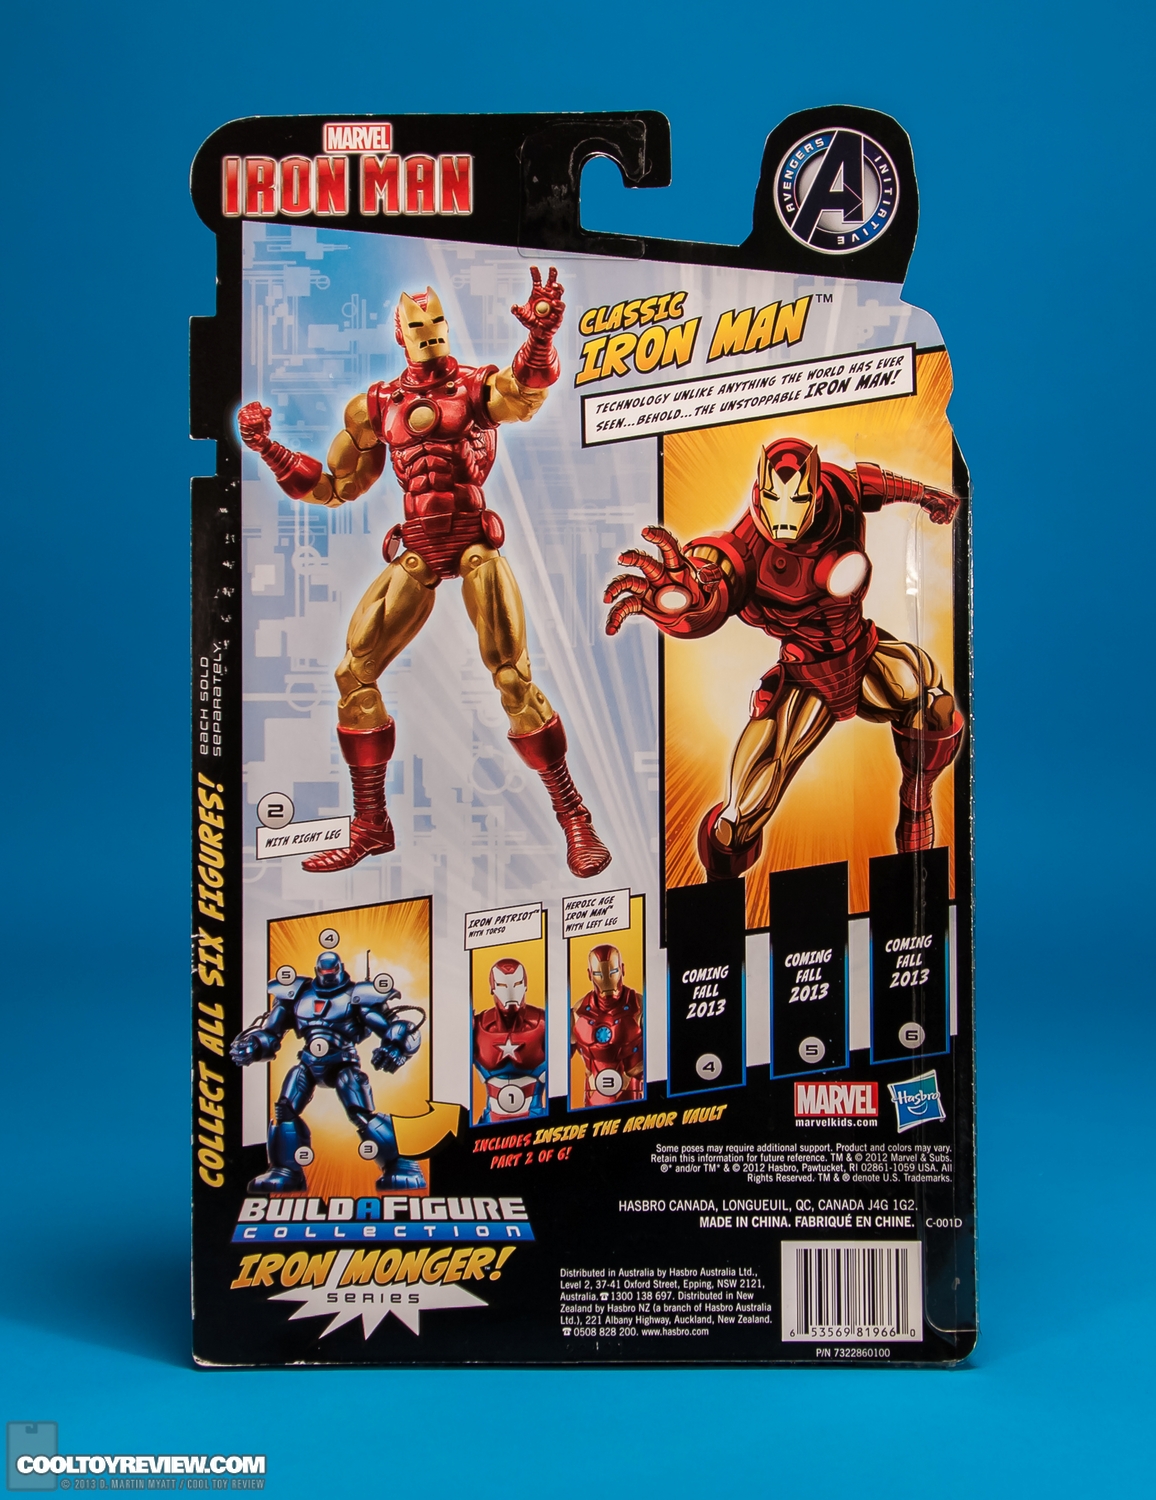 Classic-Iron-Man-Marvel-Legends-Iron-Monger-Series-015.jpg